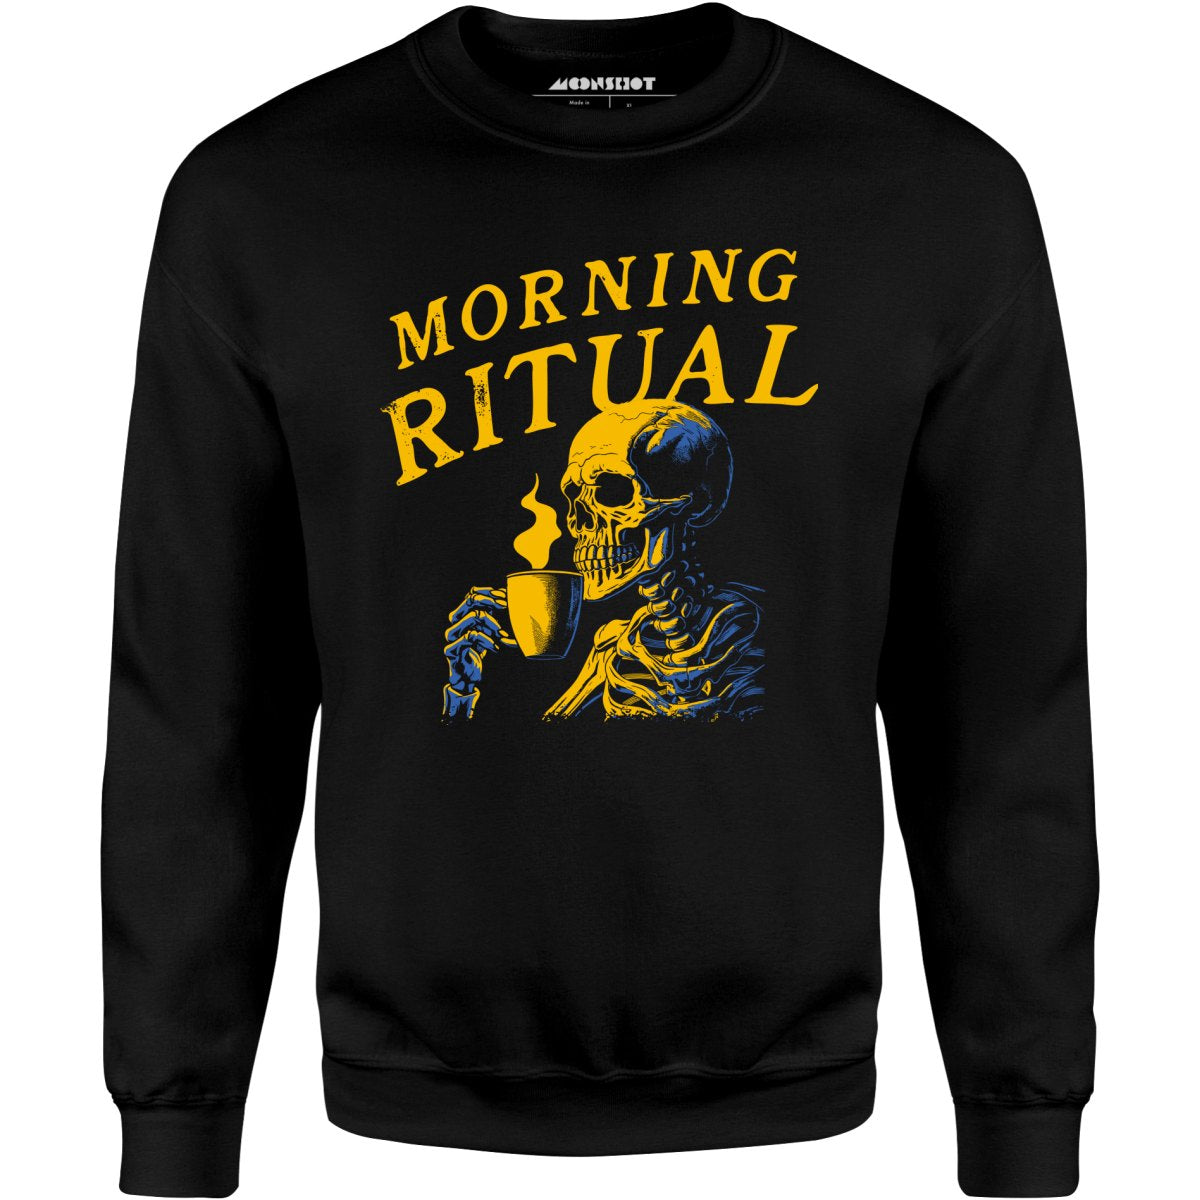 Morning Ritual - Unisex Sweatshirt